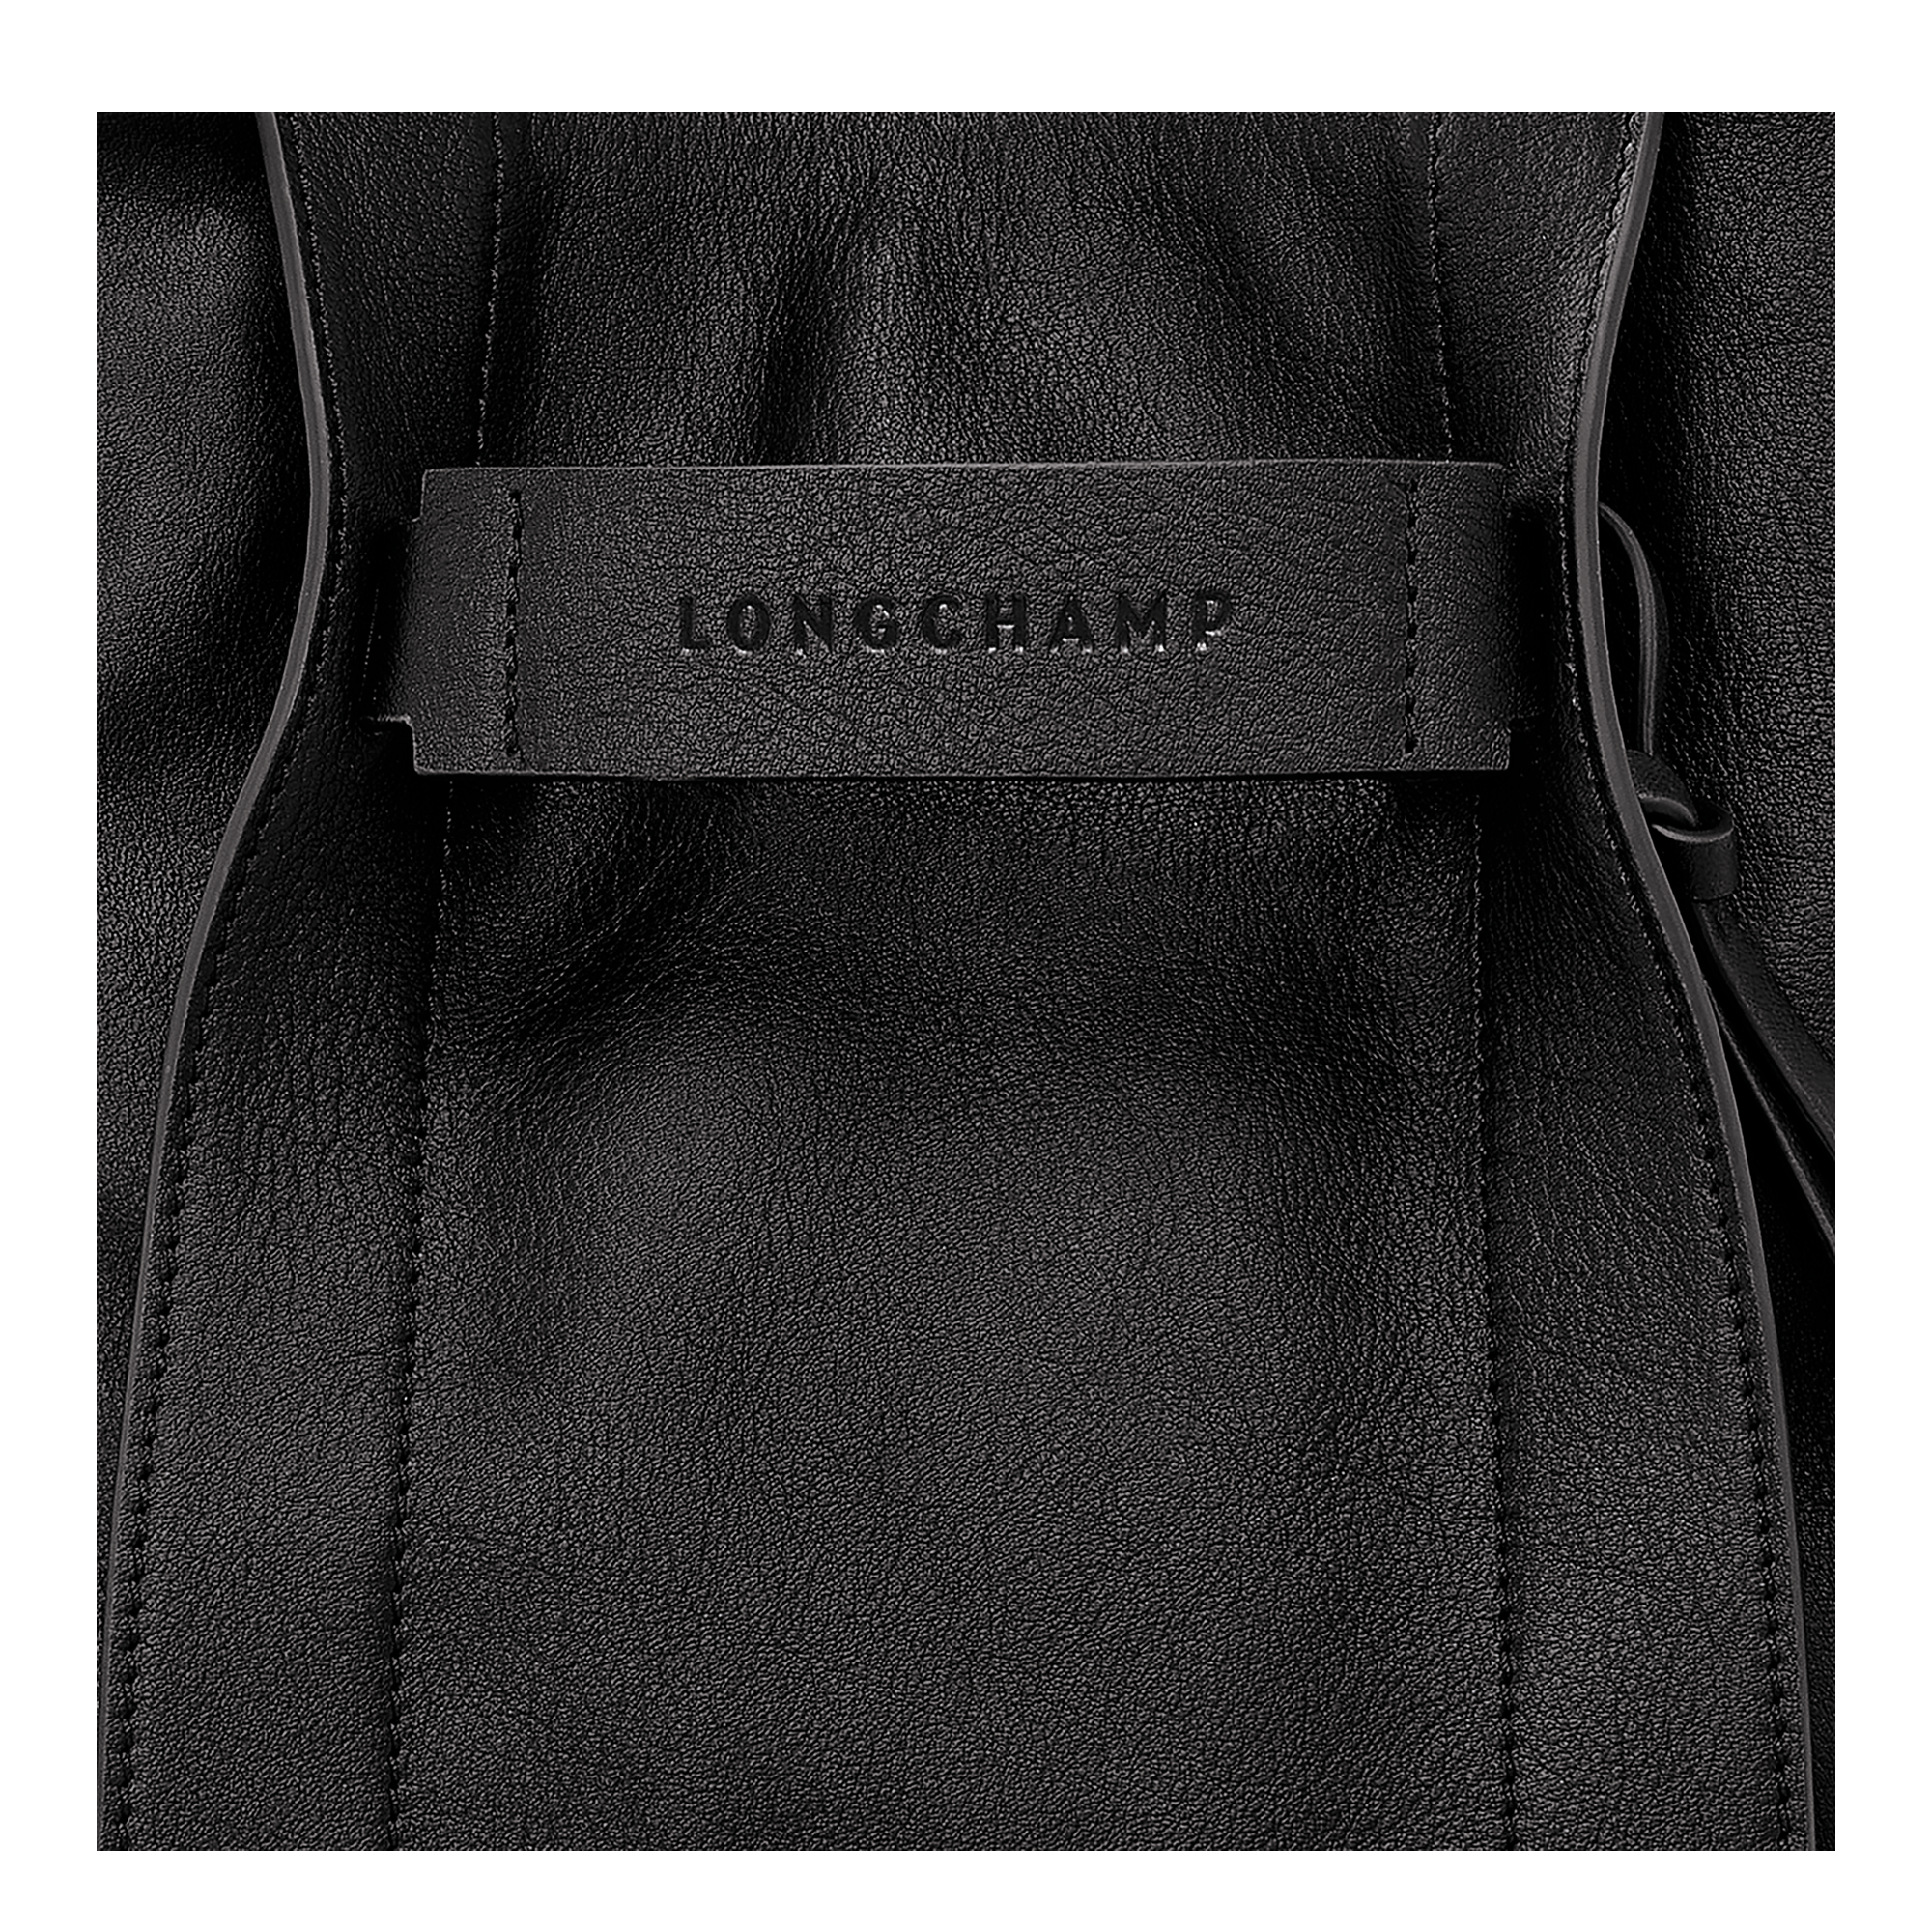 Longchamp 3D Borsa a tracolla S,  Nero